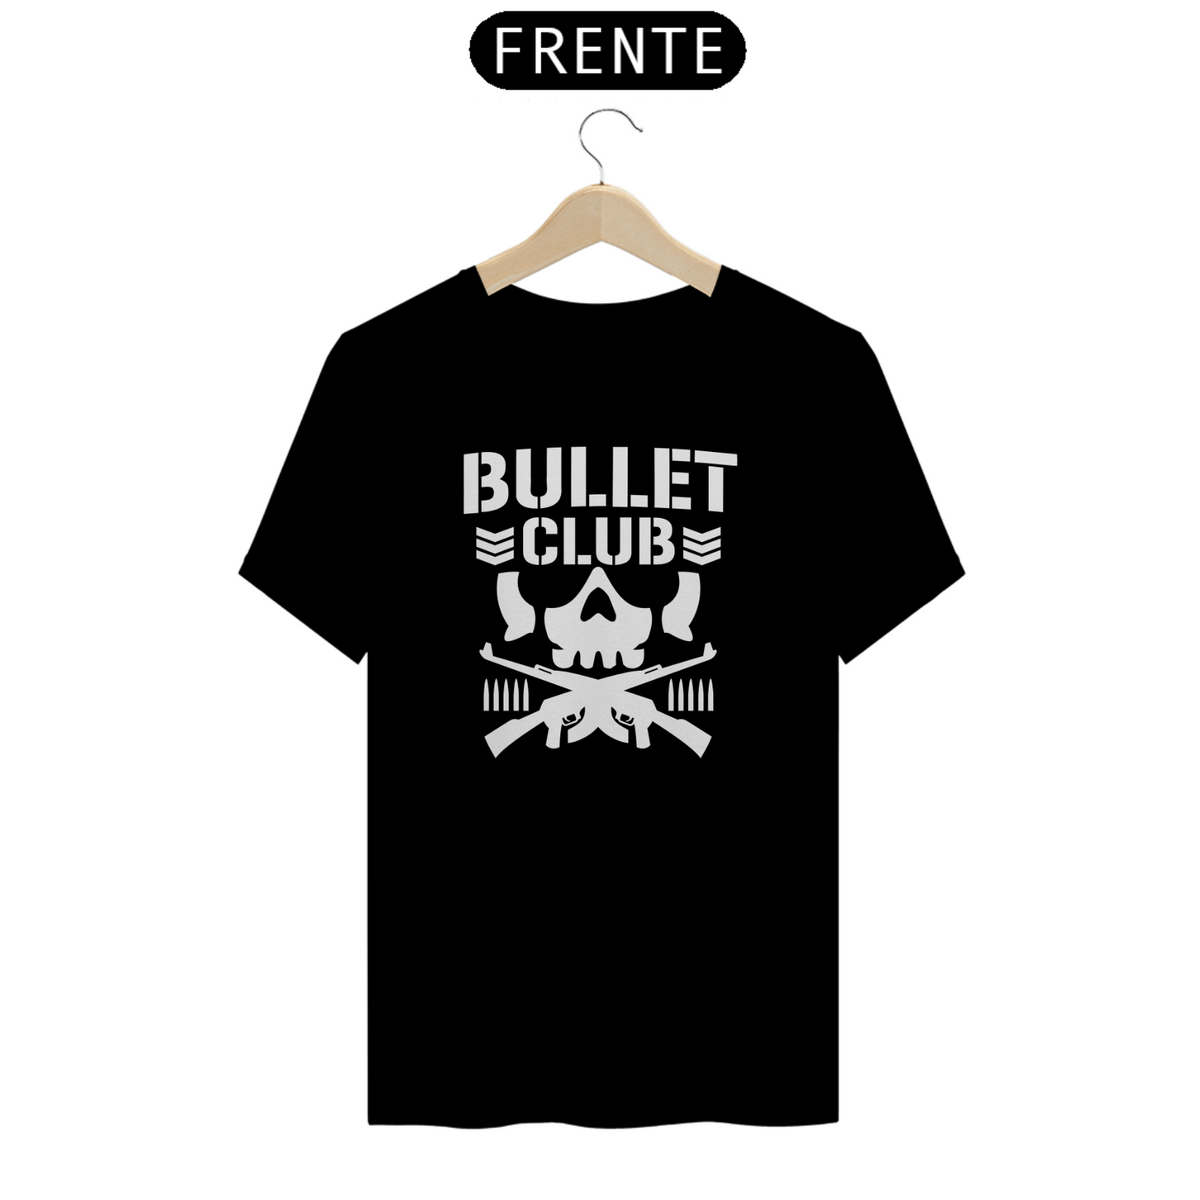 Nome do produto: Bullet Club (simples)